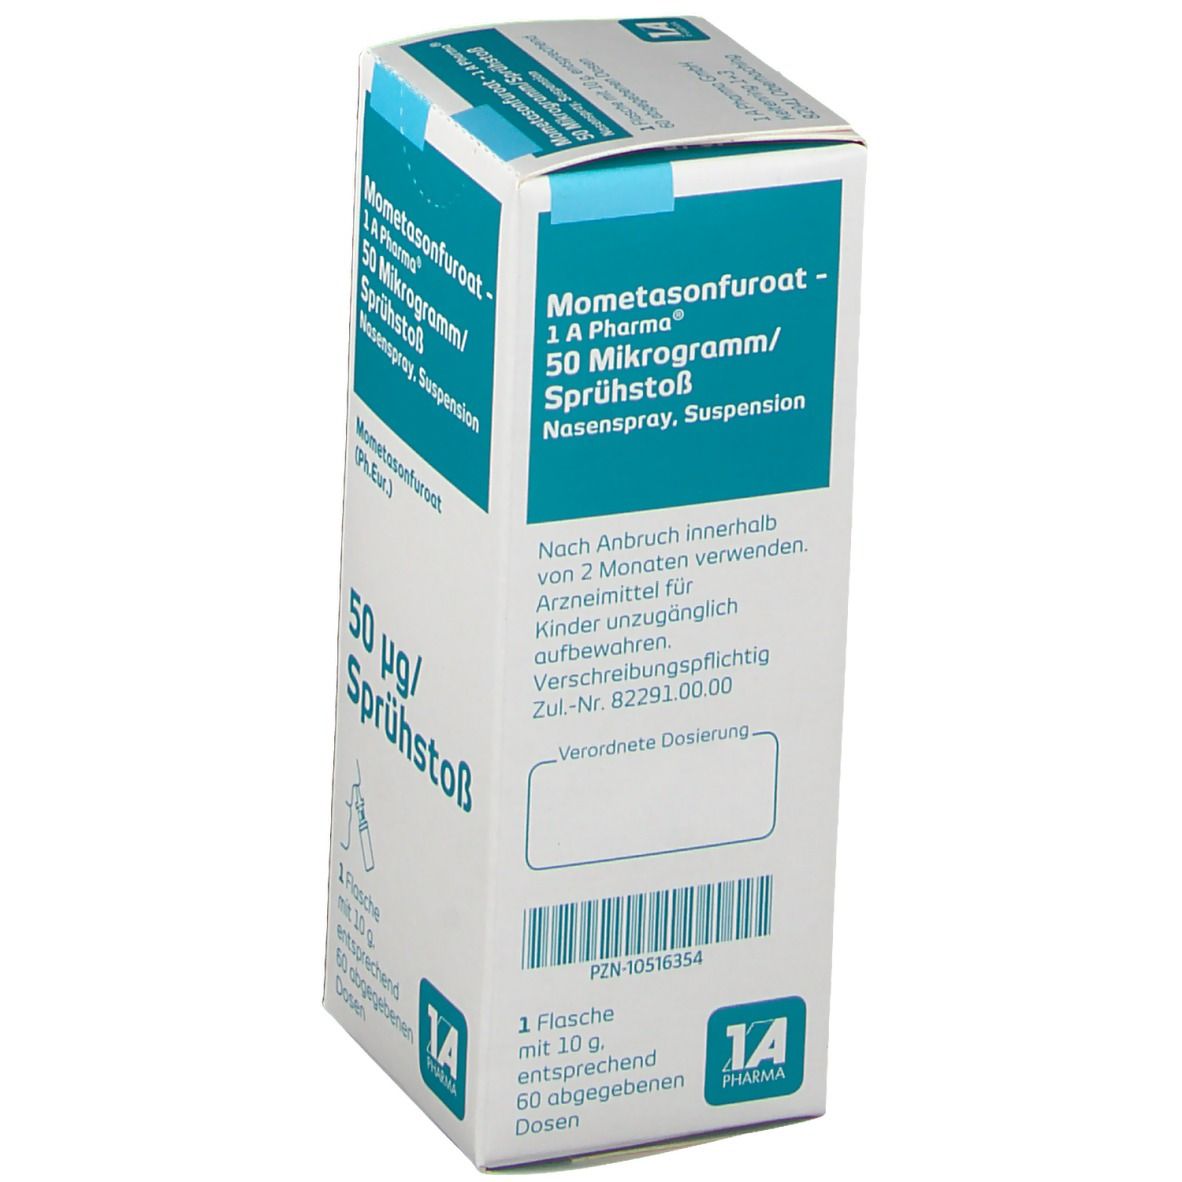 Mometasonfuroat - 1 A Pharma® 50 µg/Sprühstoß